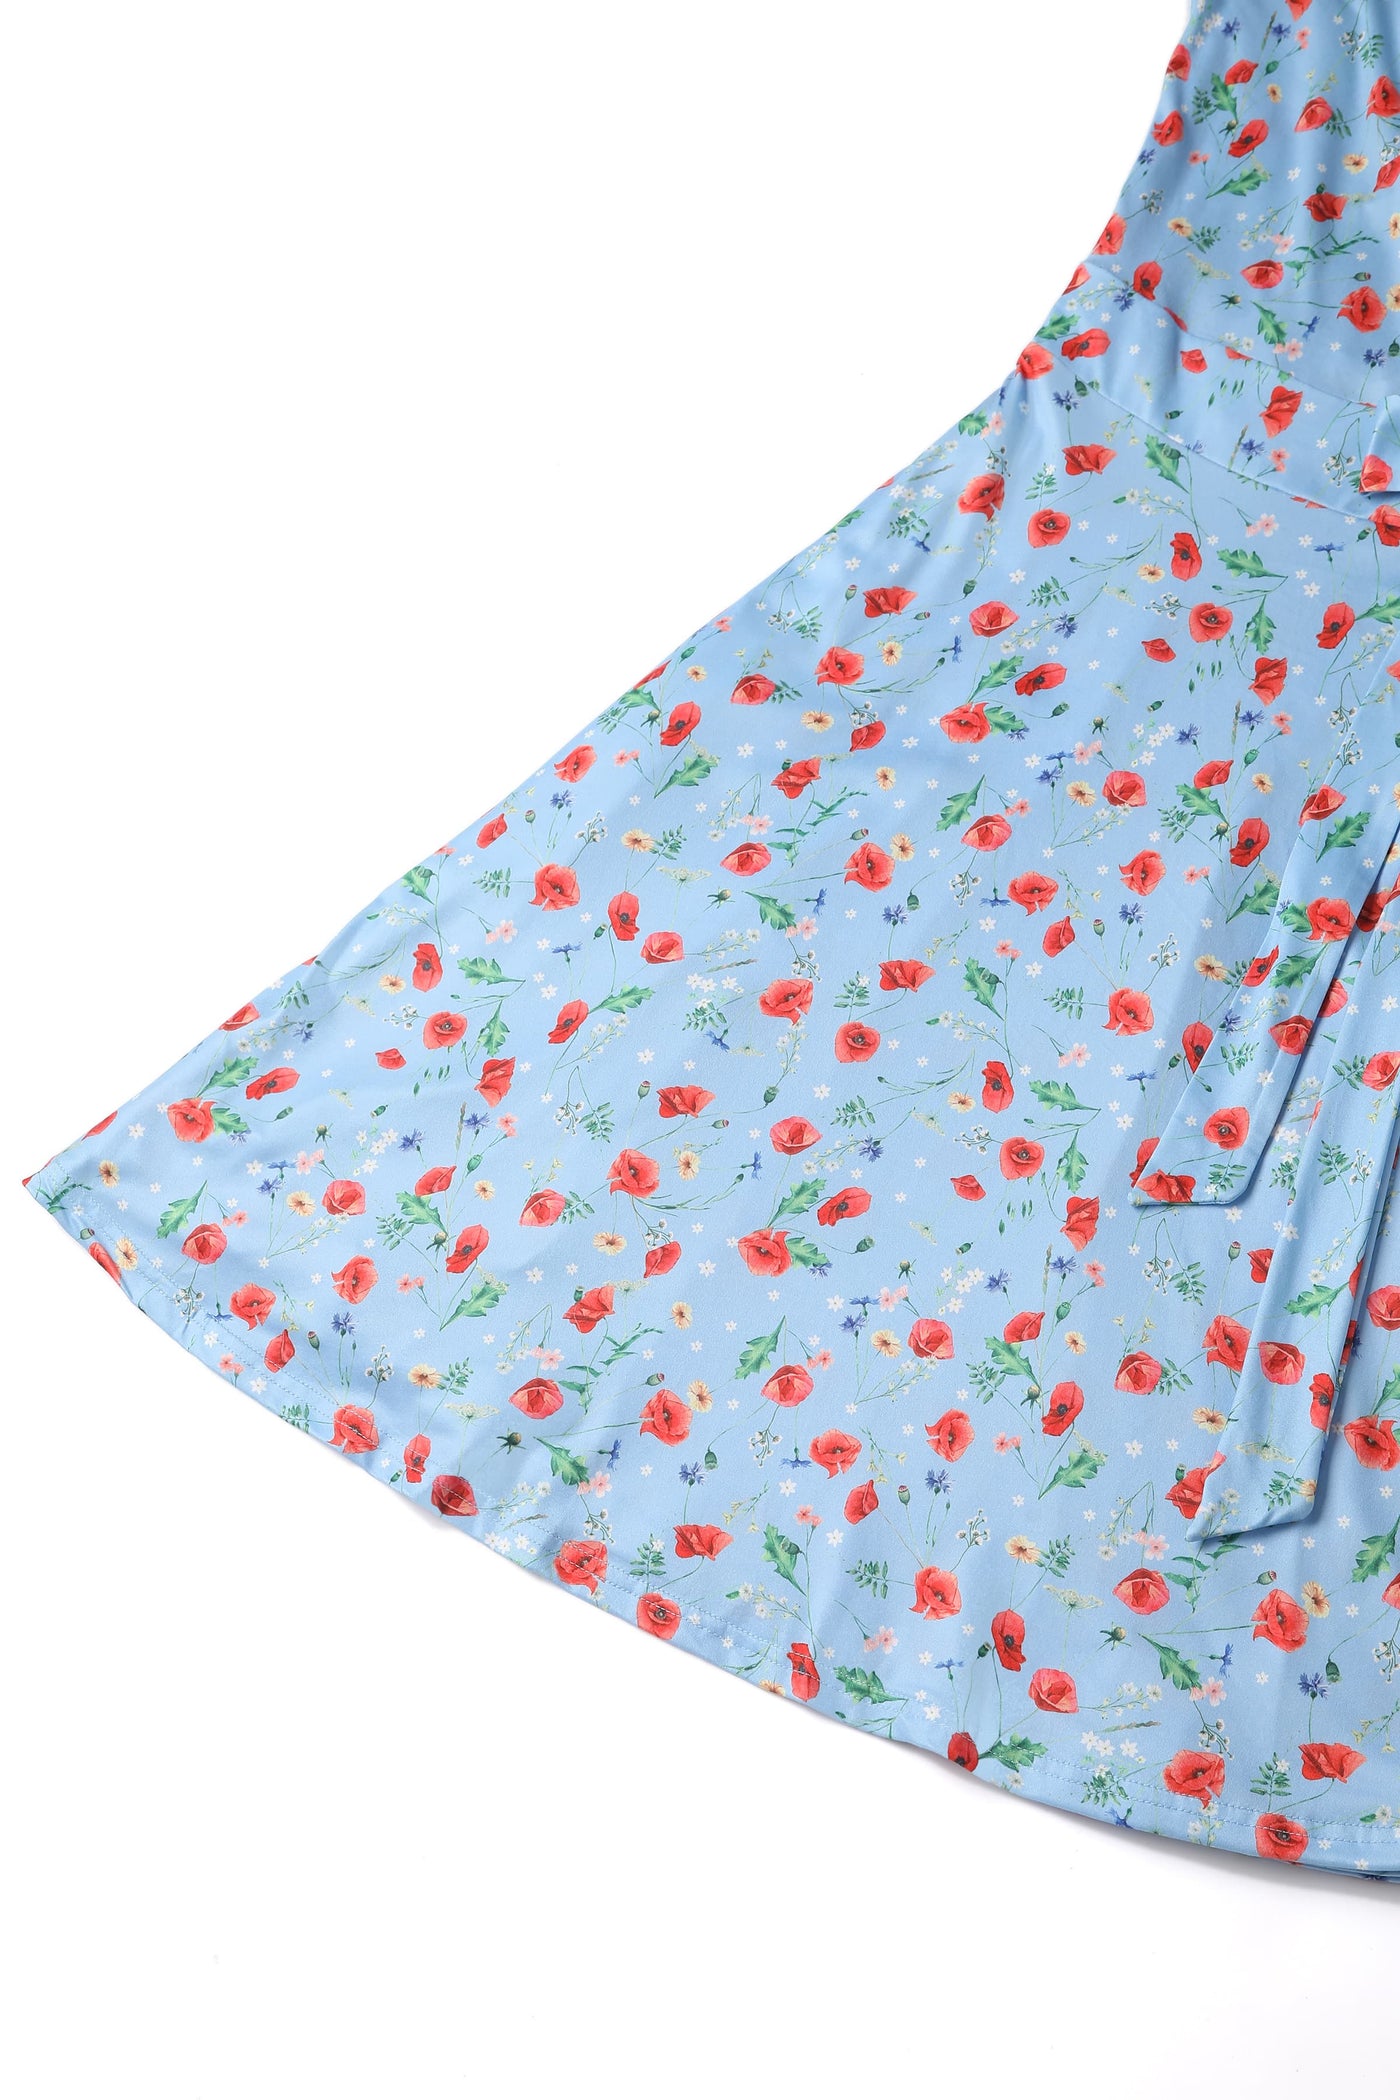 matilda light blue poppy floral wrap dress skirt close up